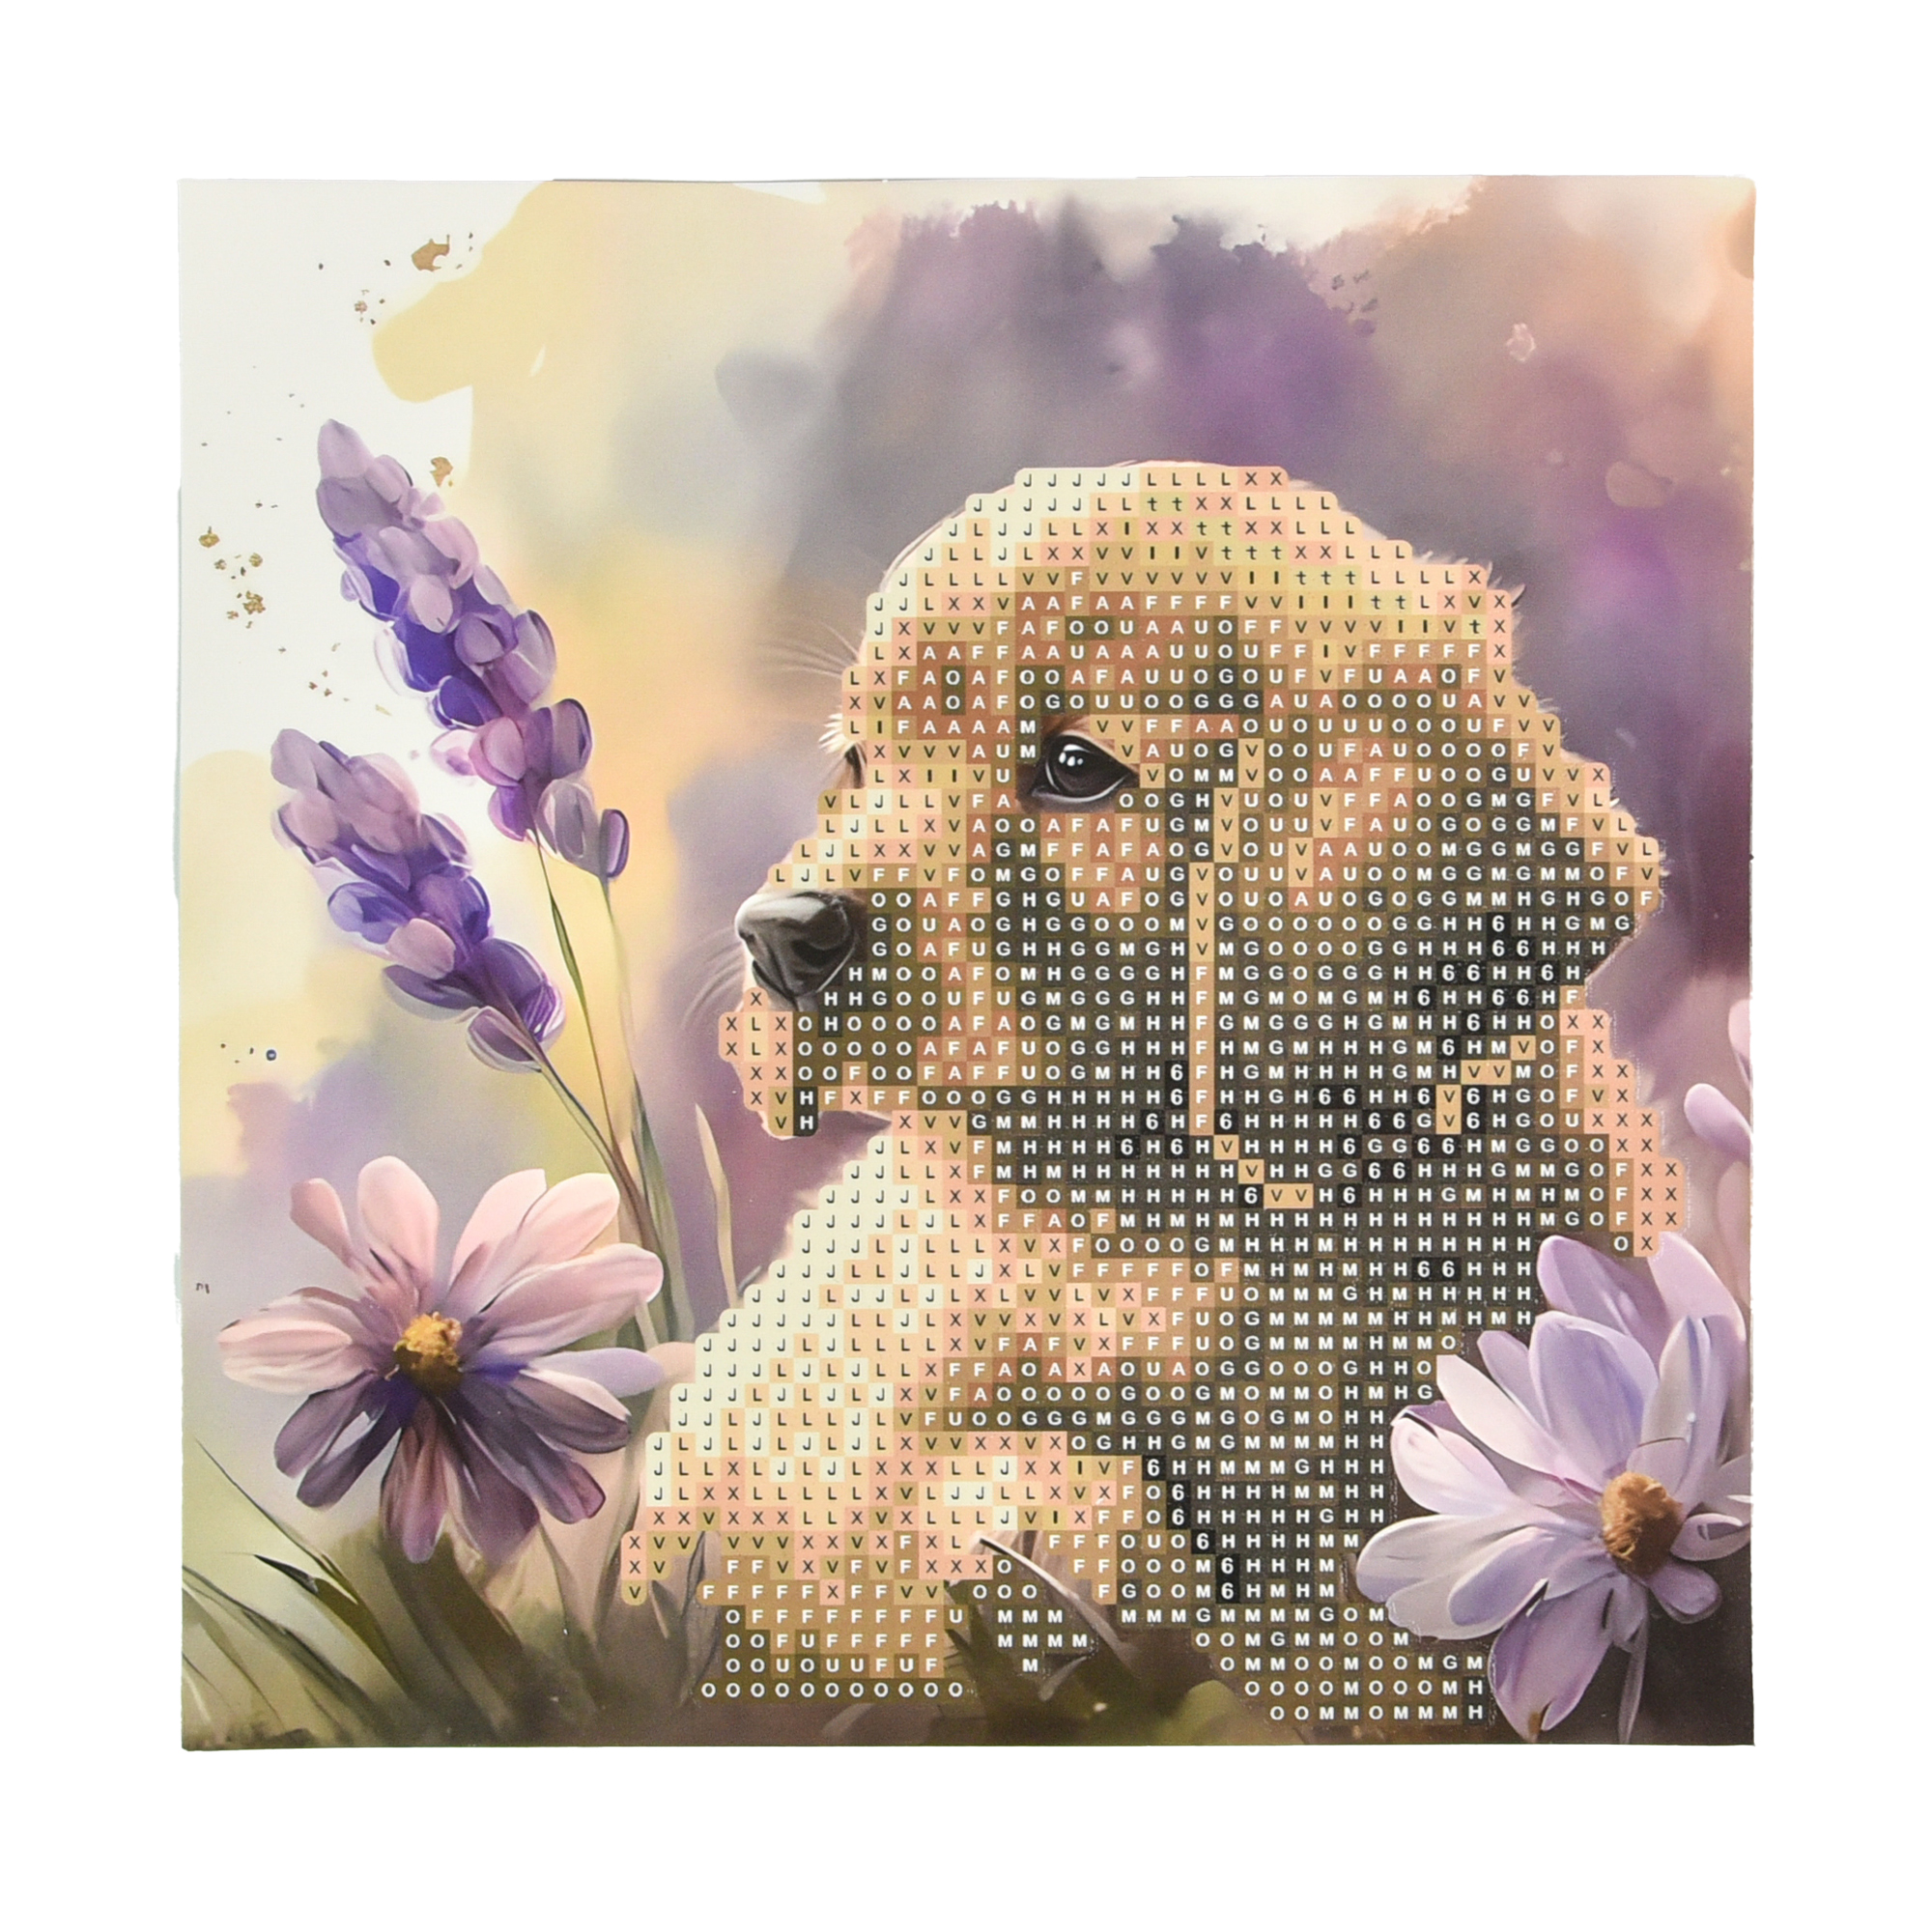 Diamond mosaic Strateg PREMIUM Golden retriever puppy on paper size 18x18 cm (JUB14398)